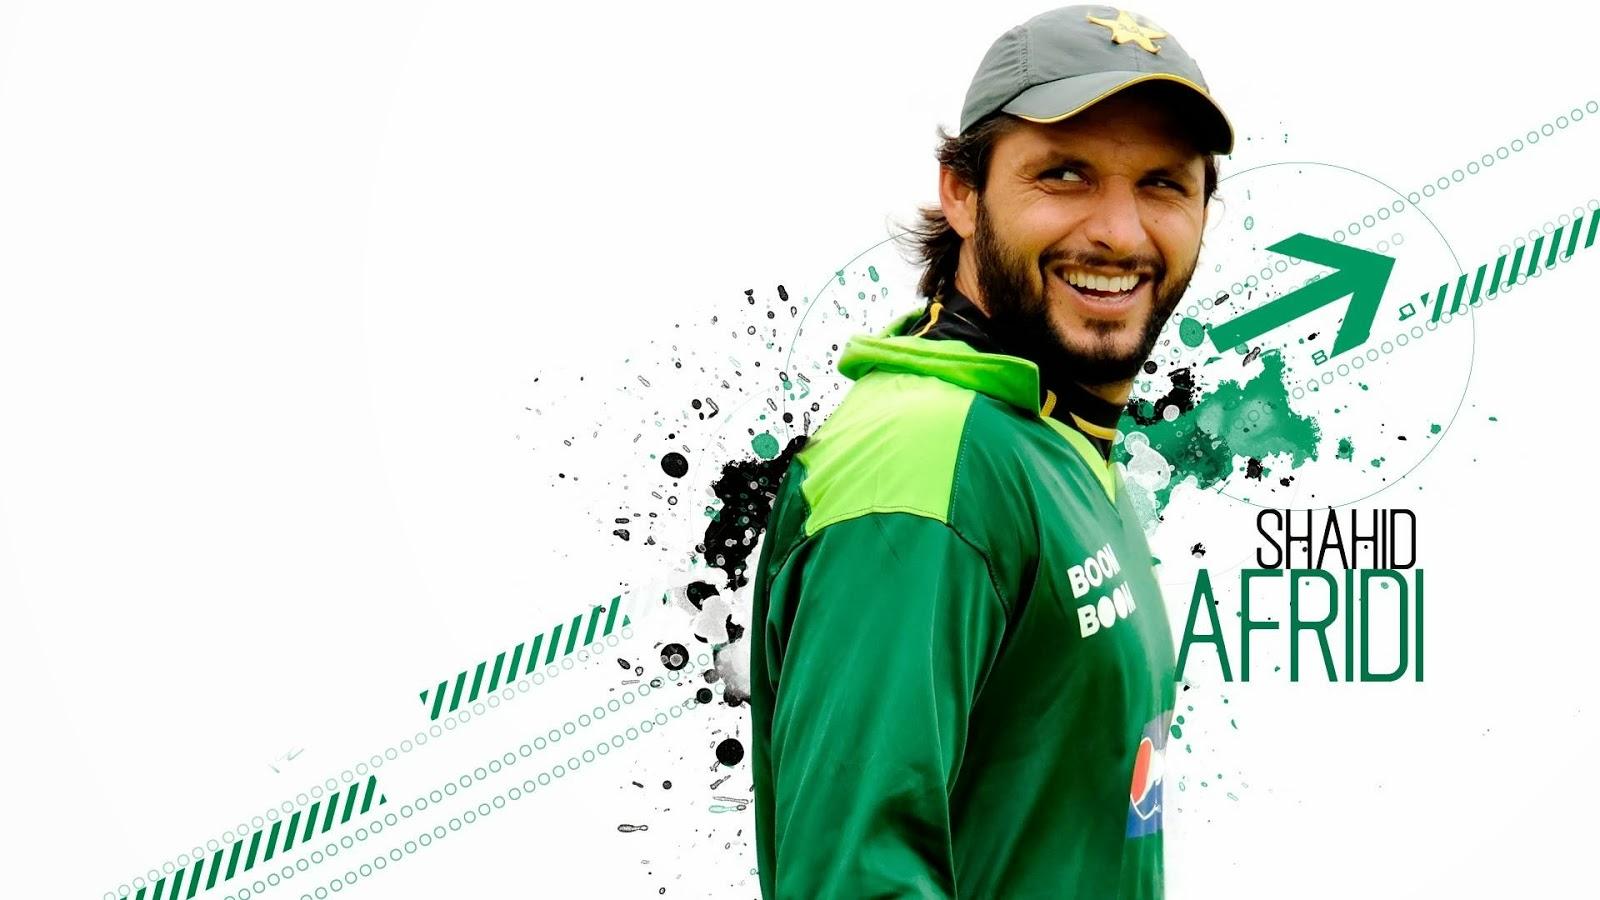 Sports Men Hub: Shahid Afridi wallpaper in Pakistan's Green Shirt